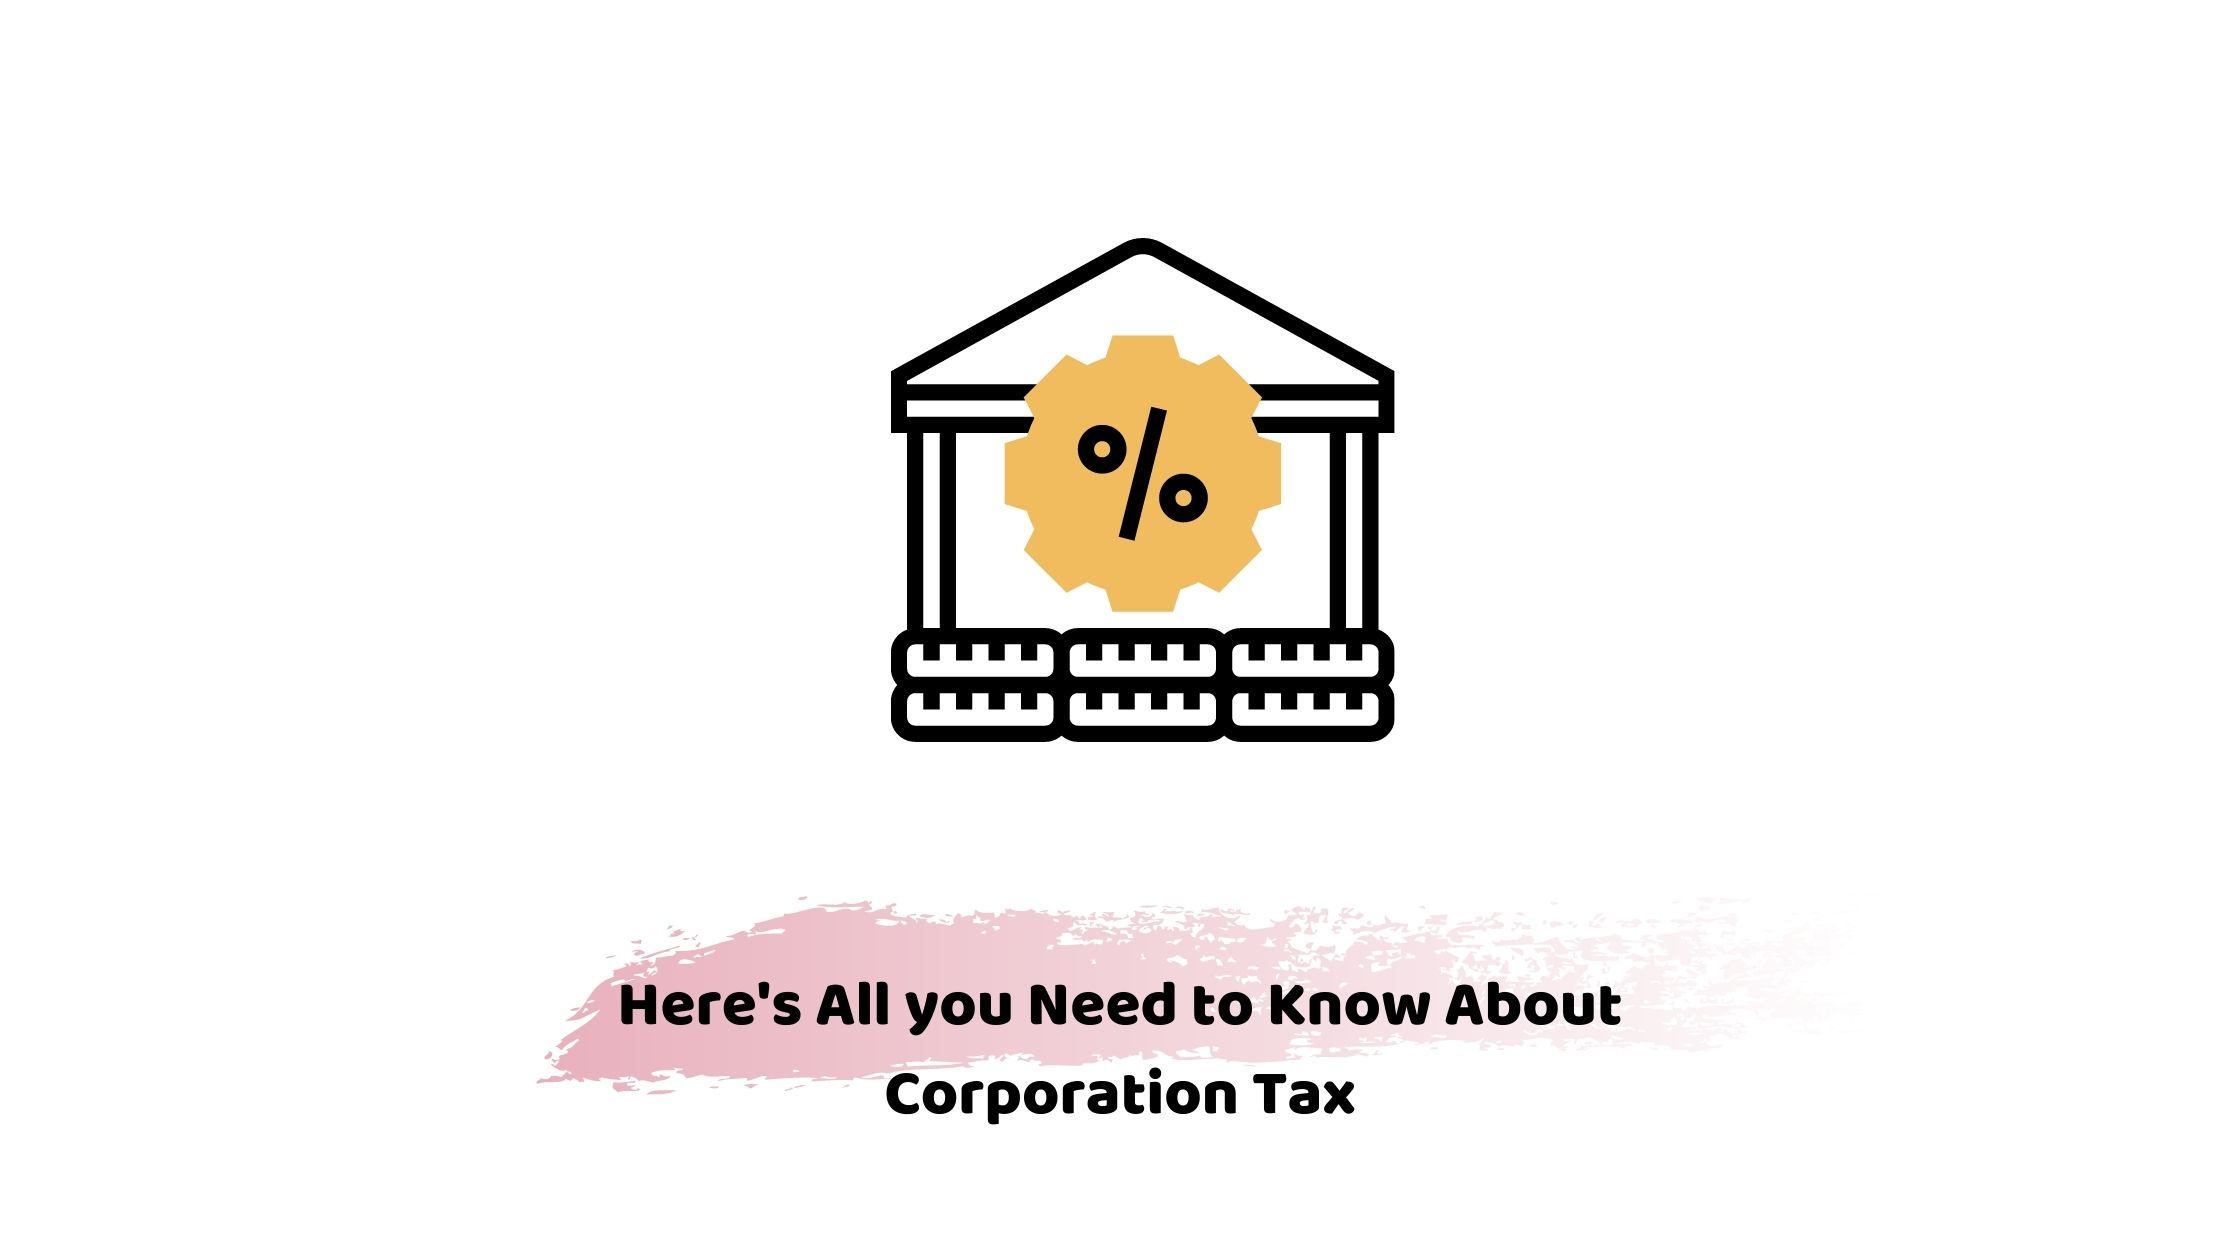 Corporation tax